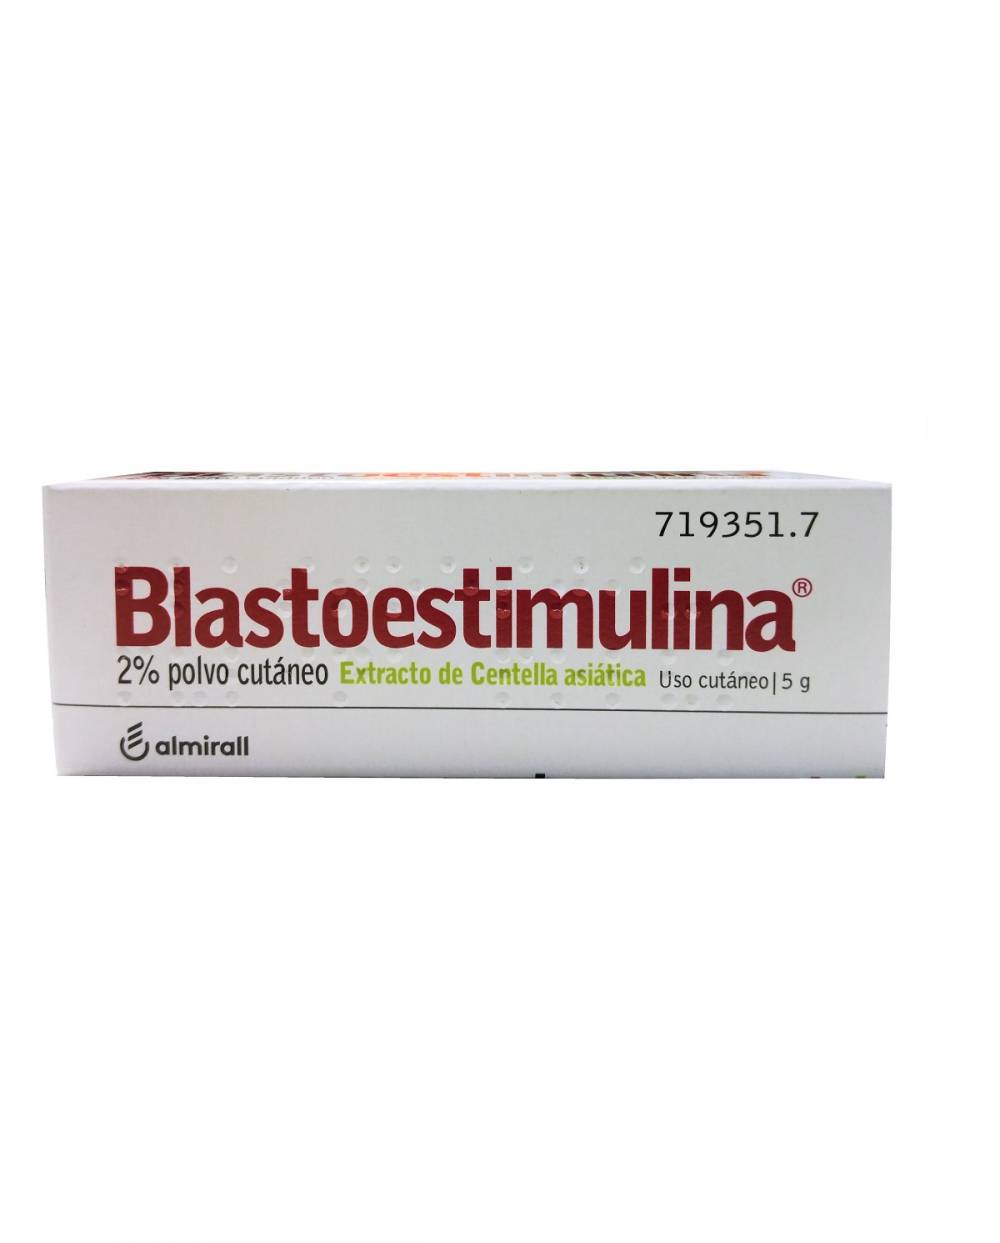 Blastoestimulina 2% polvo cutáneo  5 g